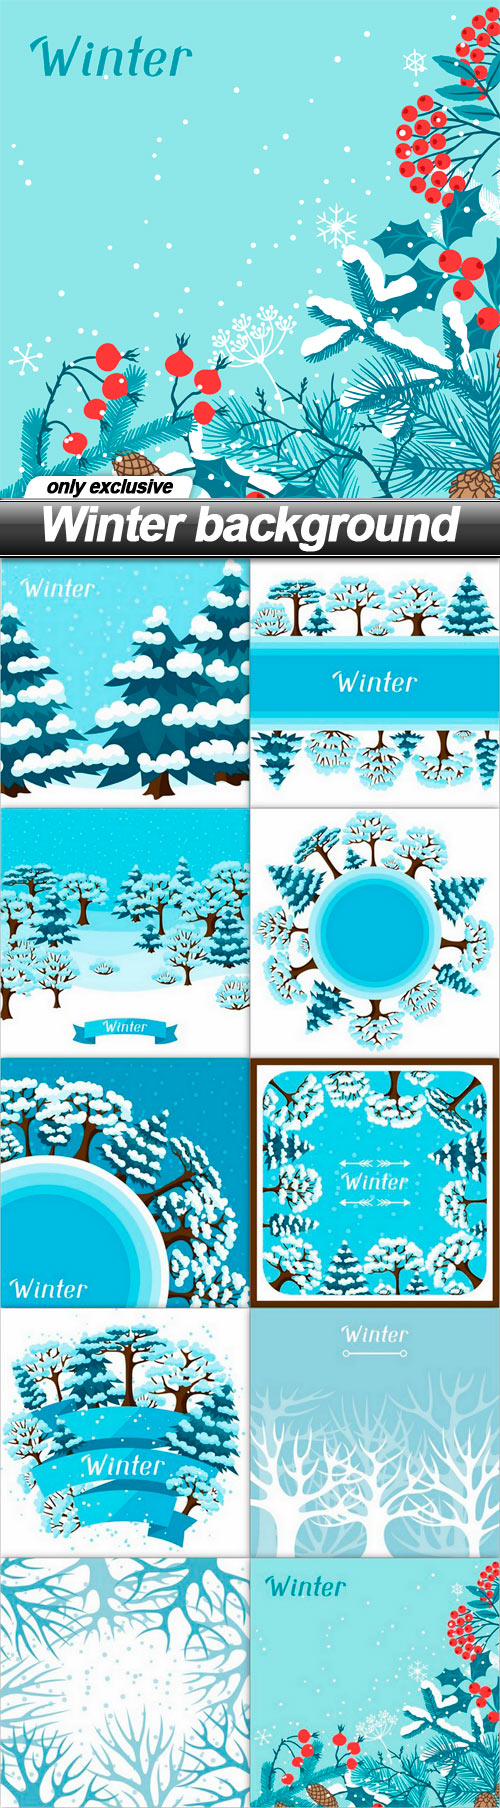 Winter background - 10 EPS